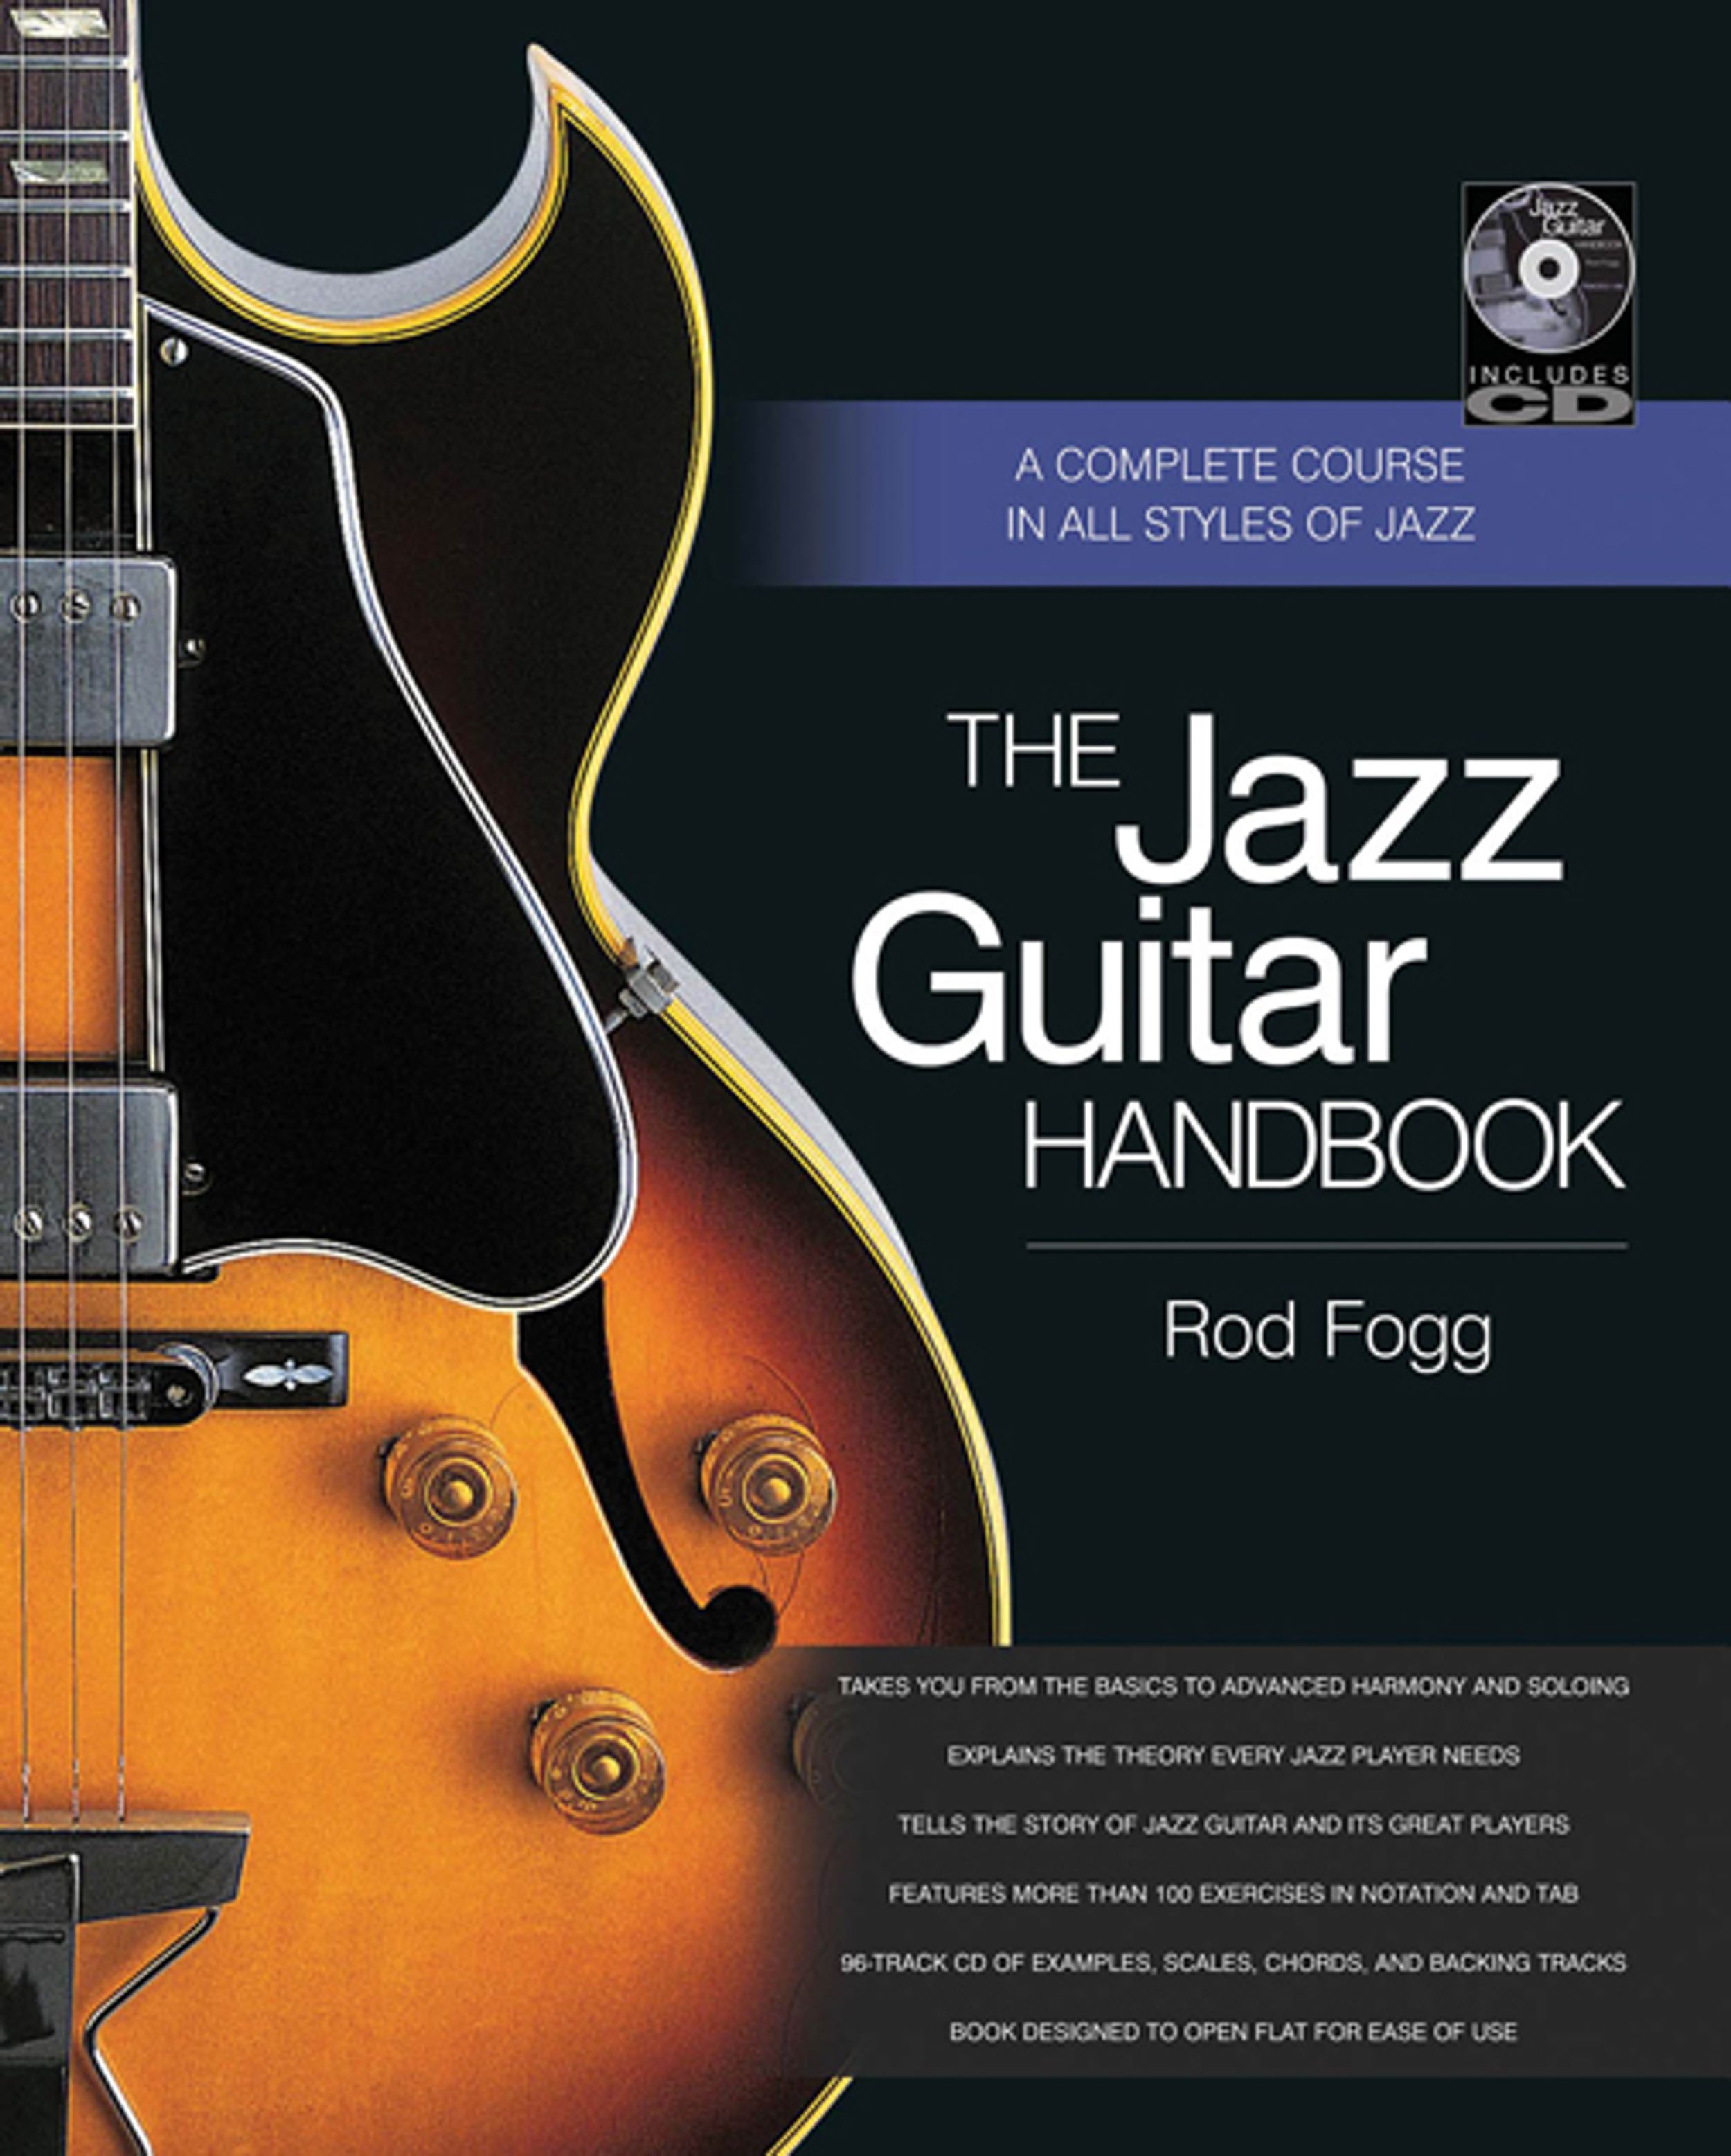 Backbeat Books Publishes The Jazz Guitar Handbook